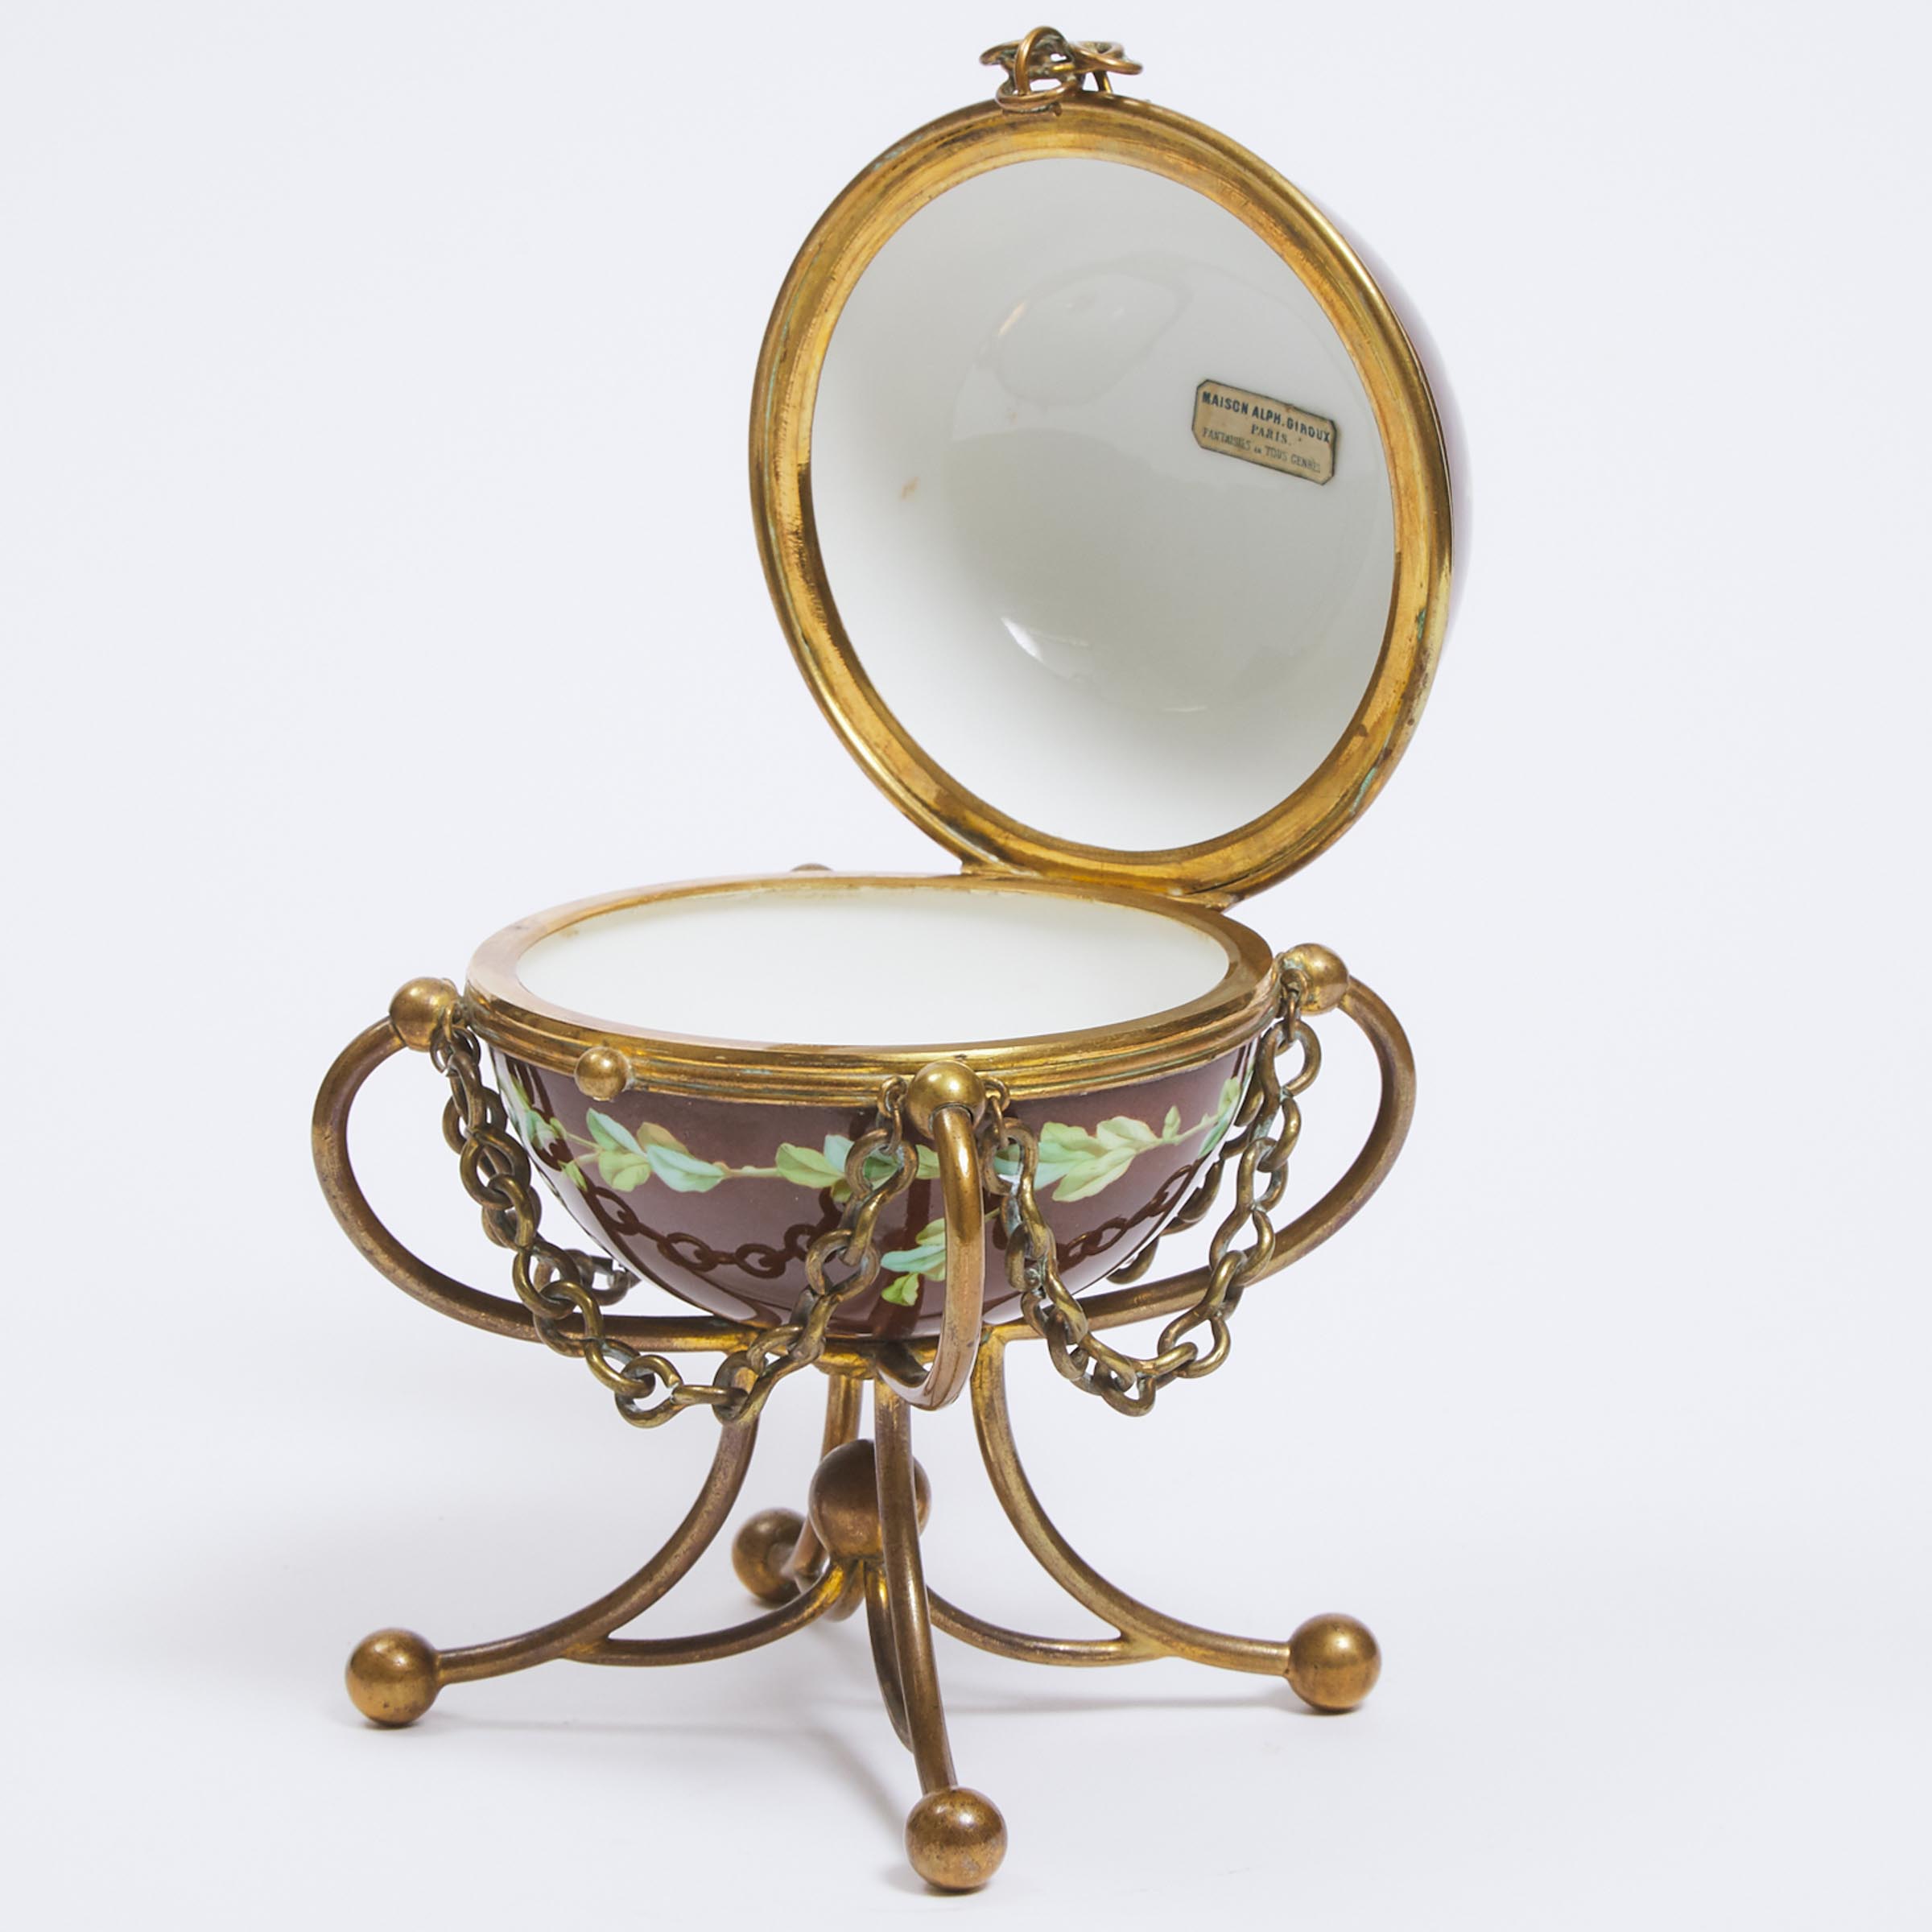 French Porcelain and Gilt Metal Powder Box, Maison Alphonse Giroux, 19th century 